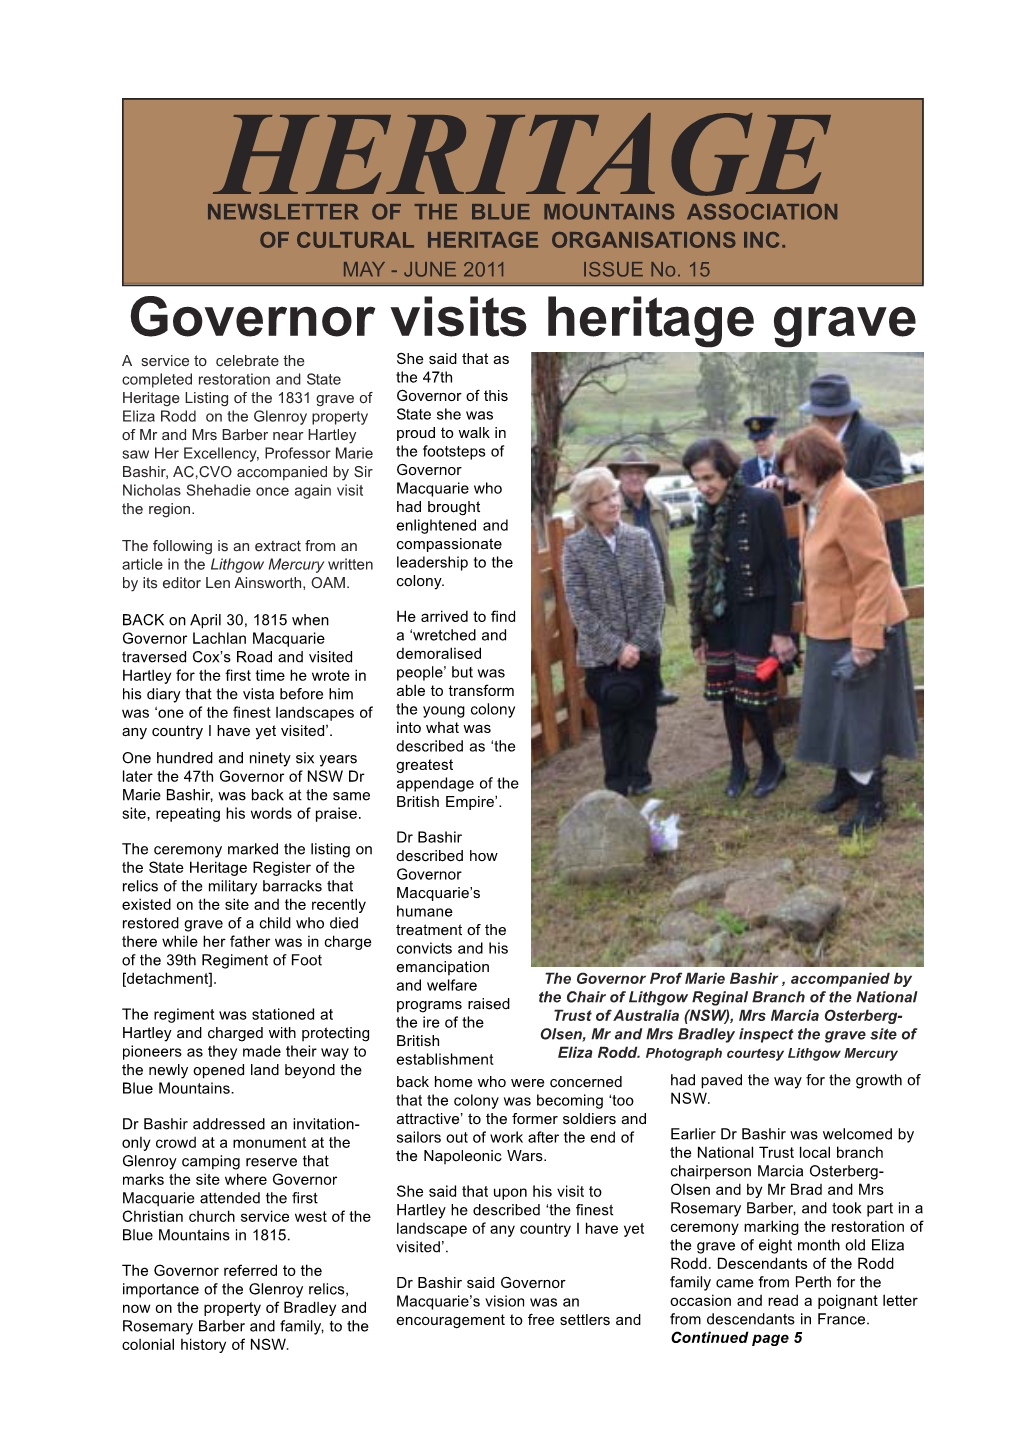 Heritage Newsletter Jan-Feb 2009